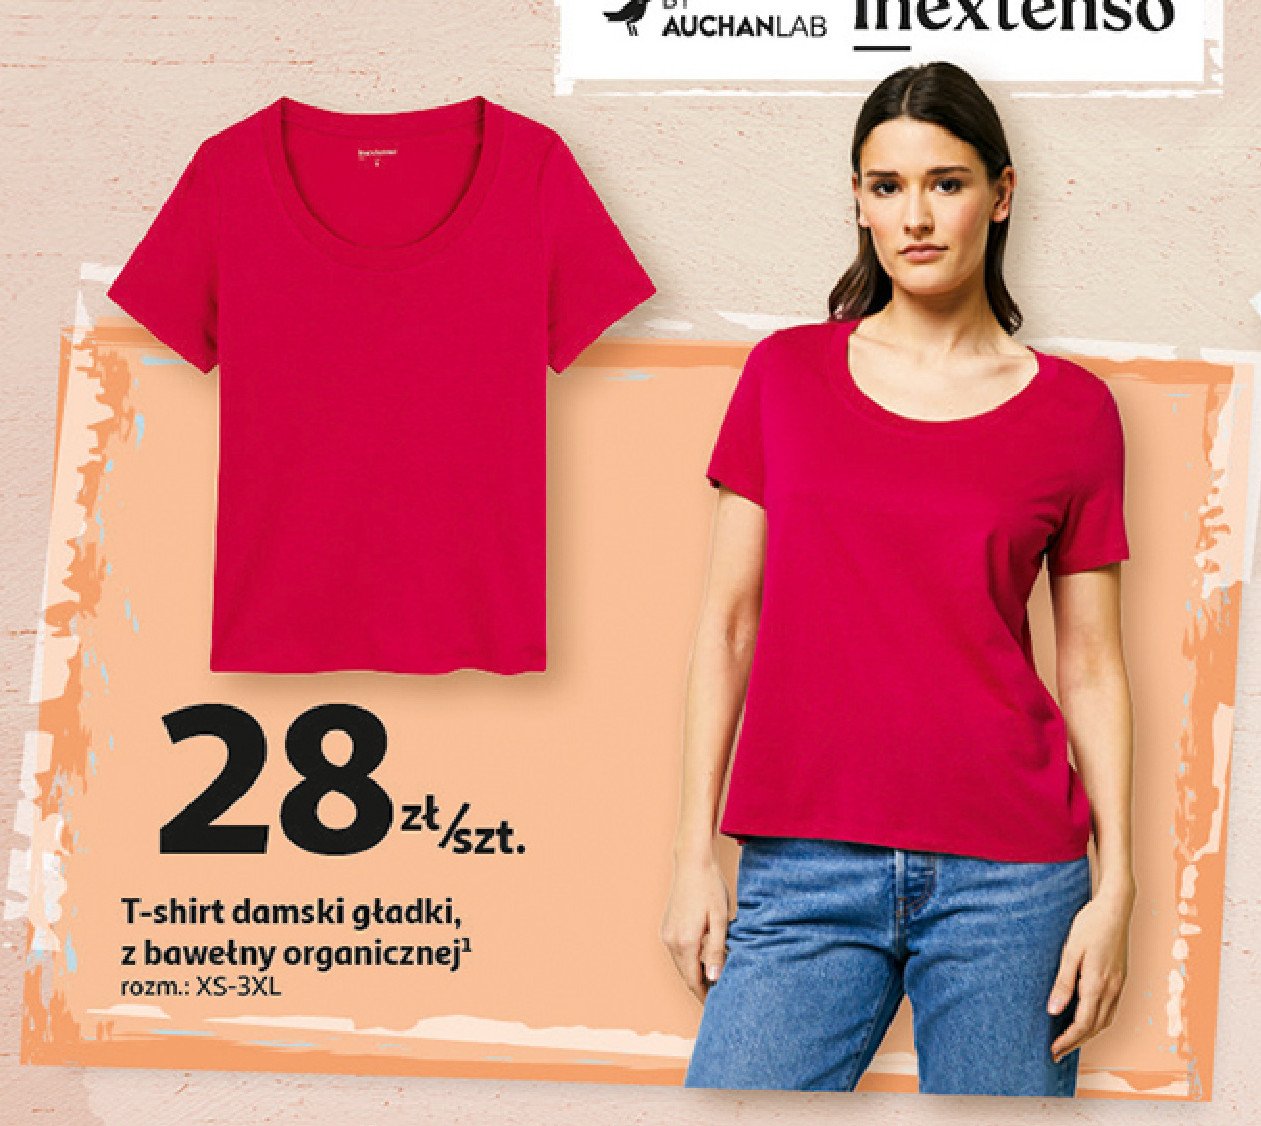 T-shirt damski gładki xs-3xl Auchan inextenso promocja